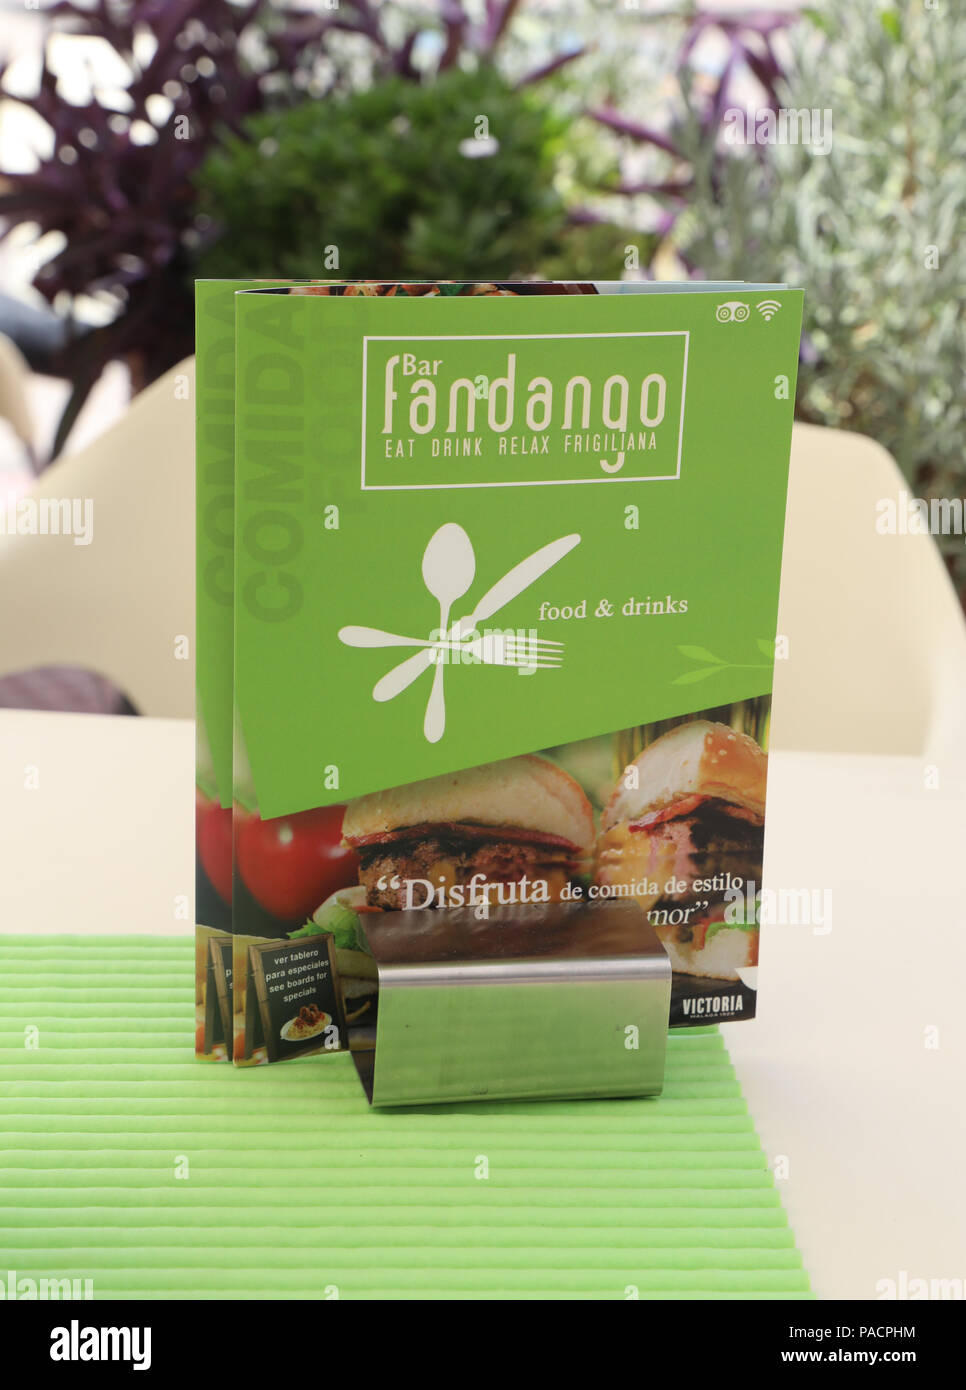 Menu card at Fandango's bar restaurant in Frigiliana Spain Stock Photo